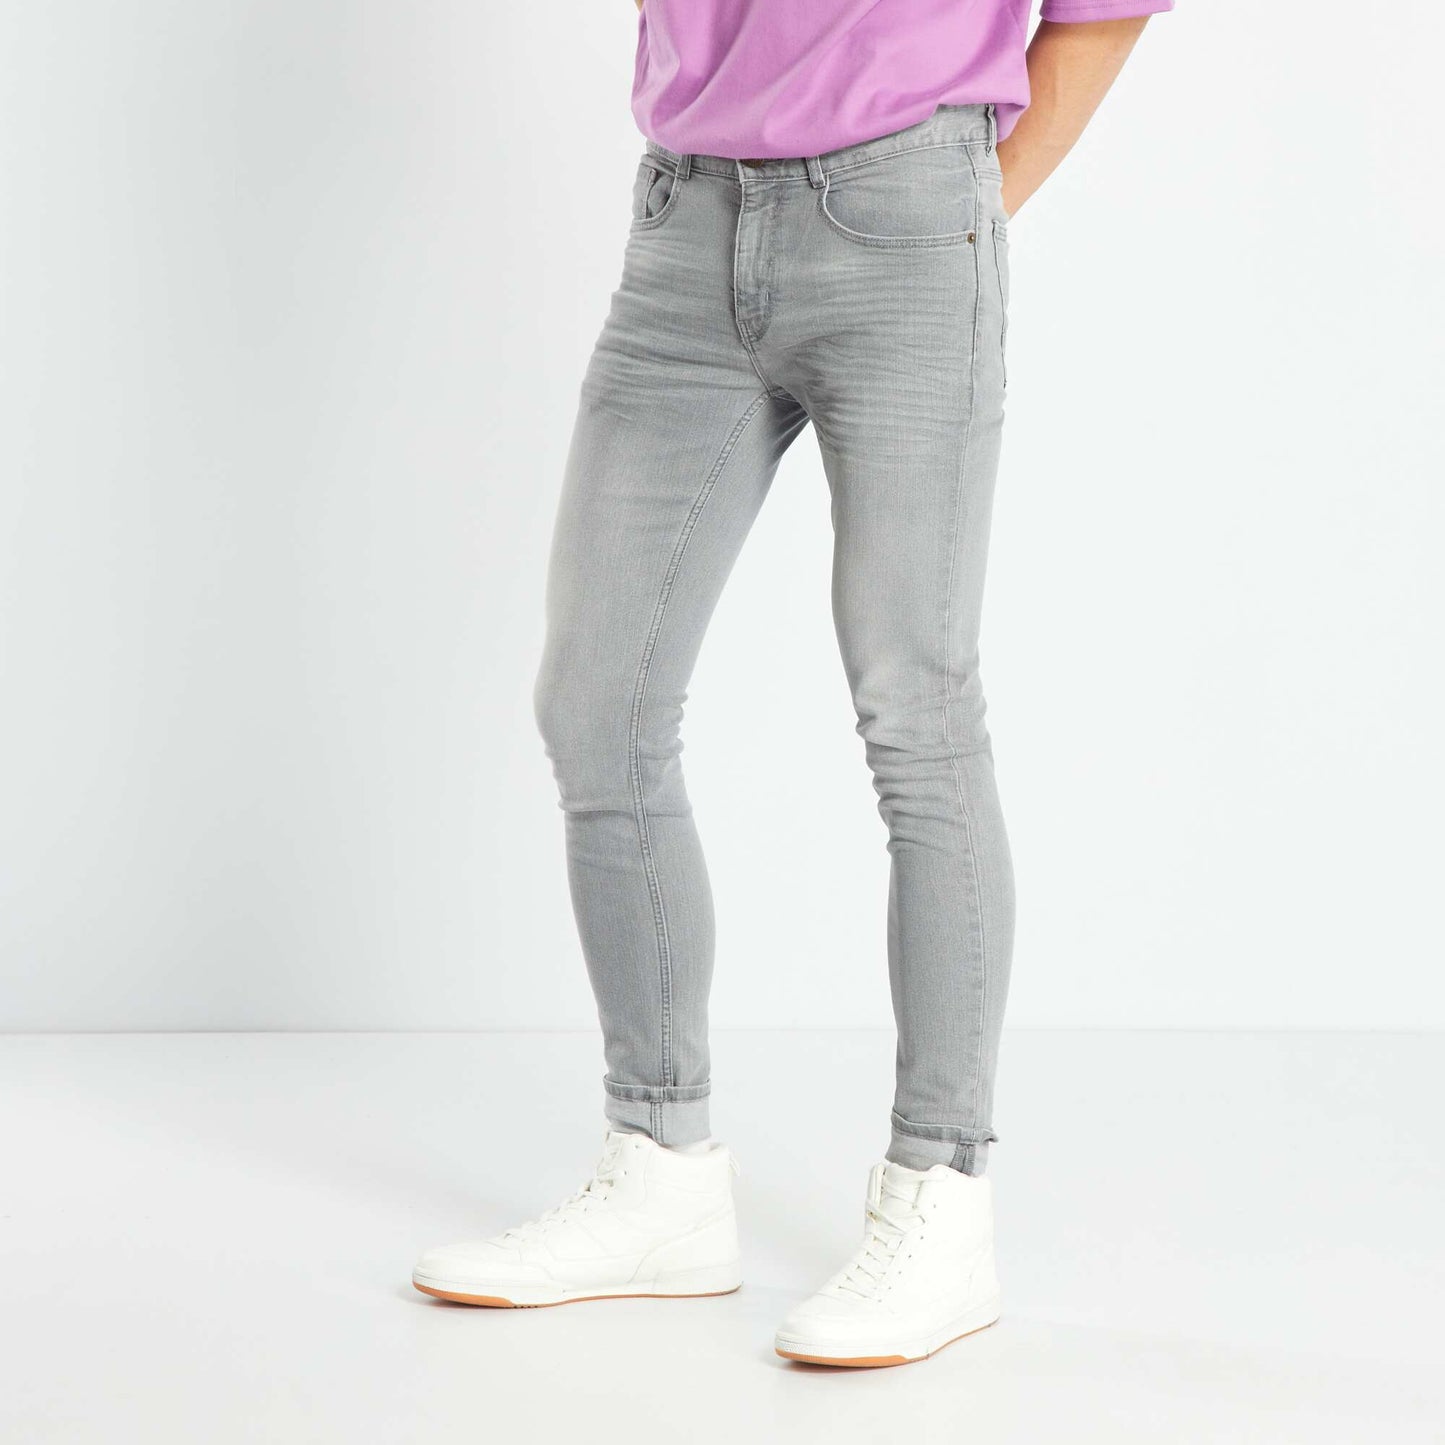 Eco-design skinny jeans GREY